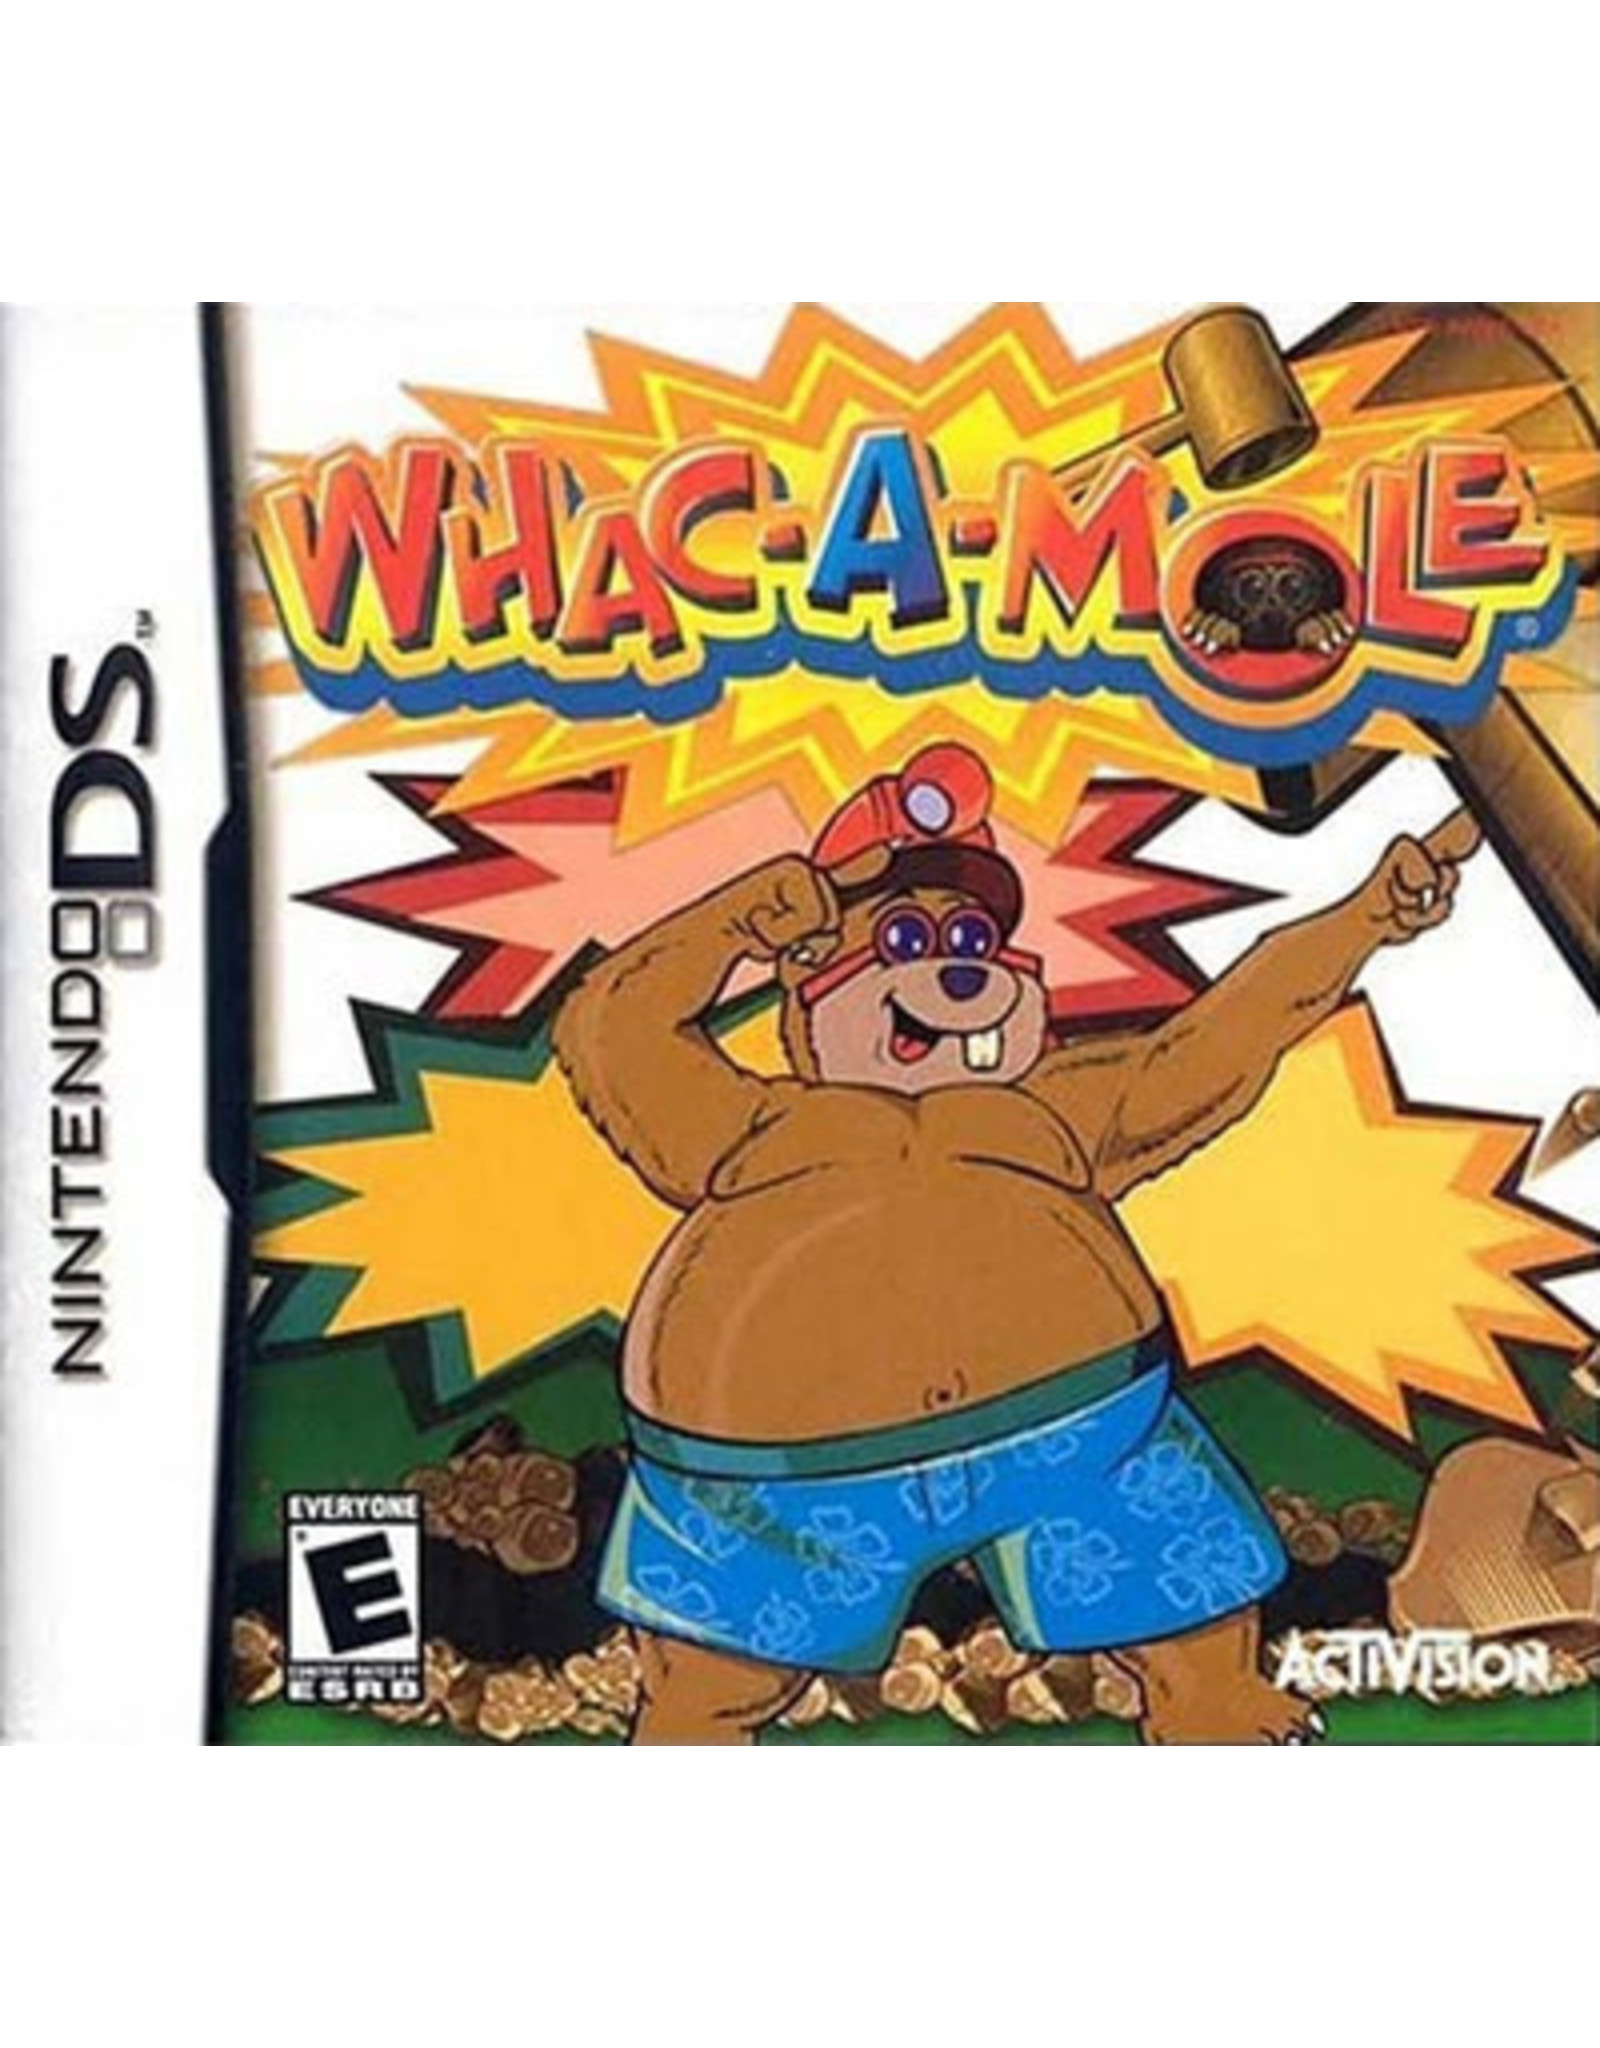 Nintendo DS Whac-A-Mole (CiB)